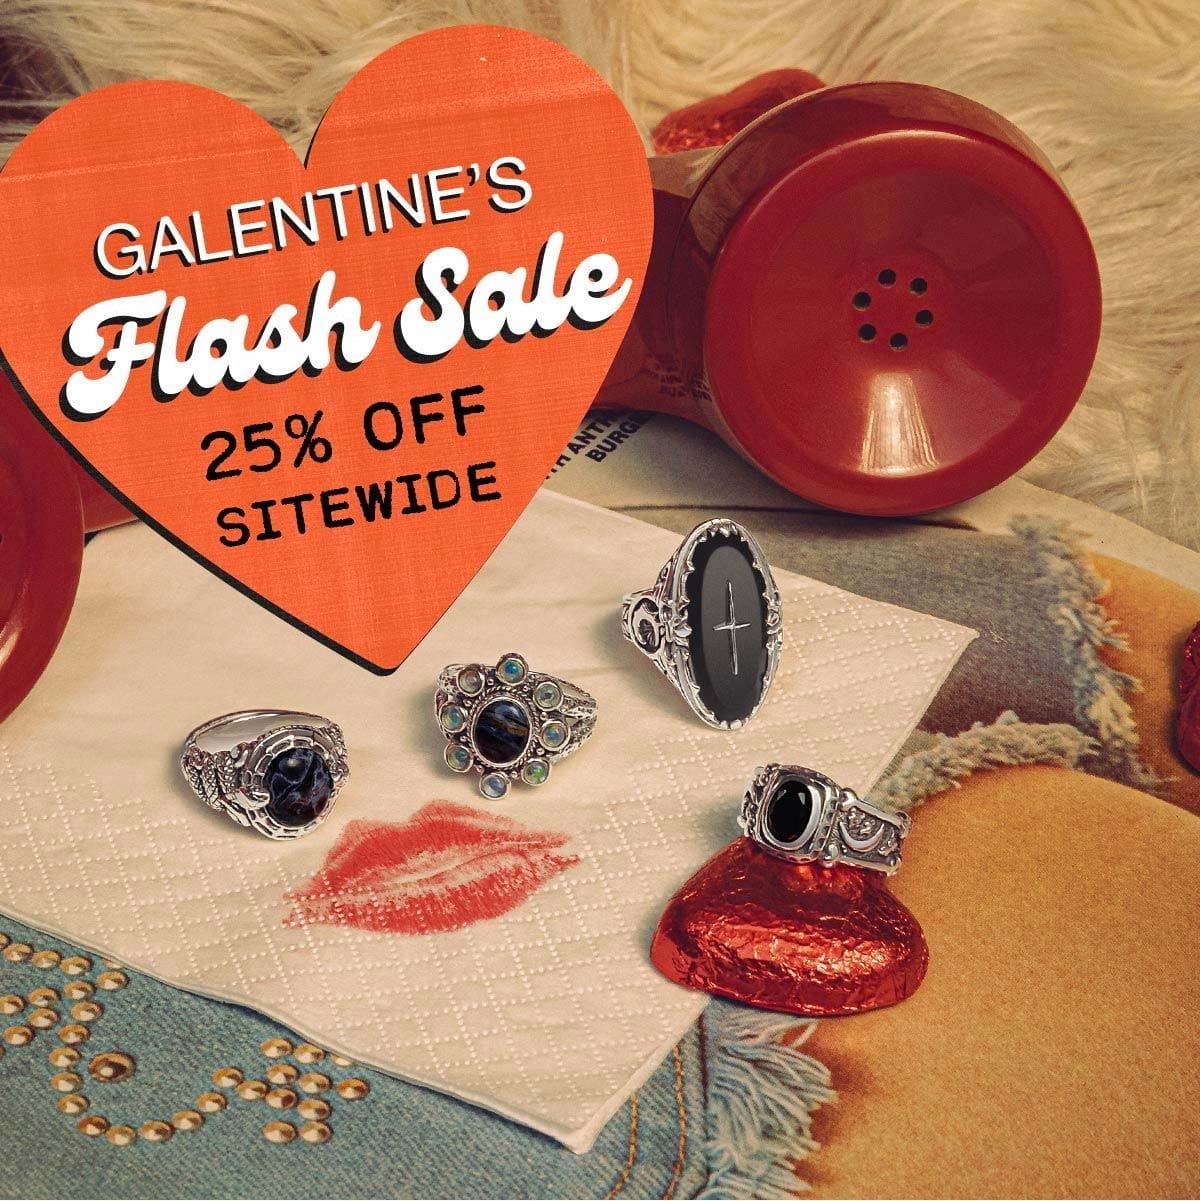 Galentine's Flash Sale